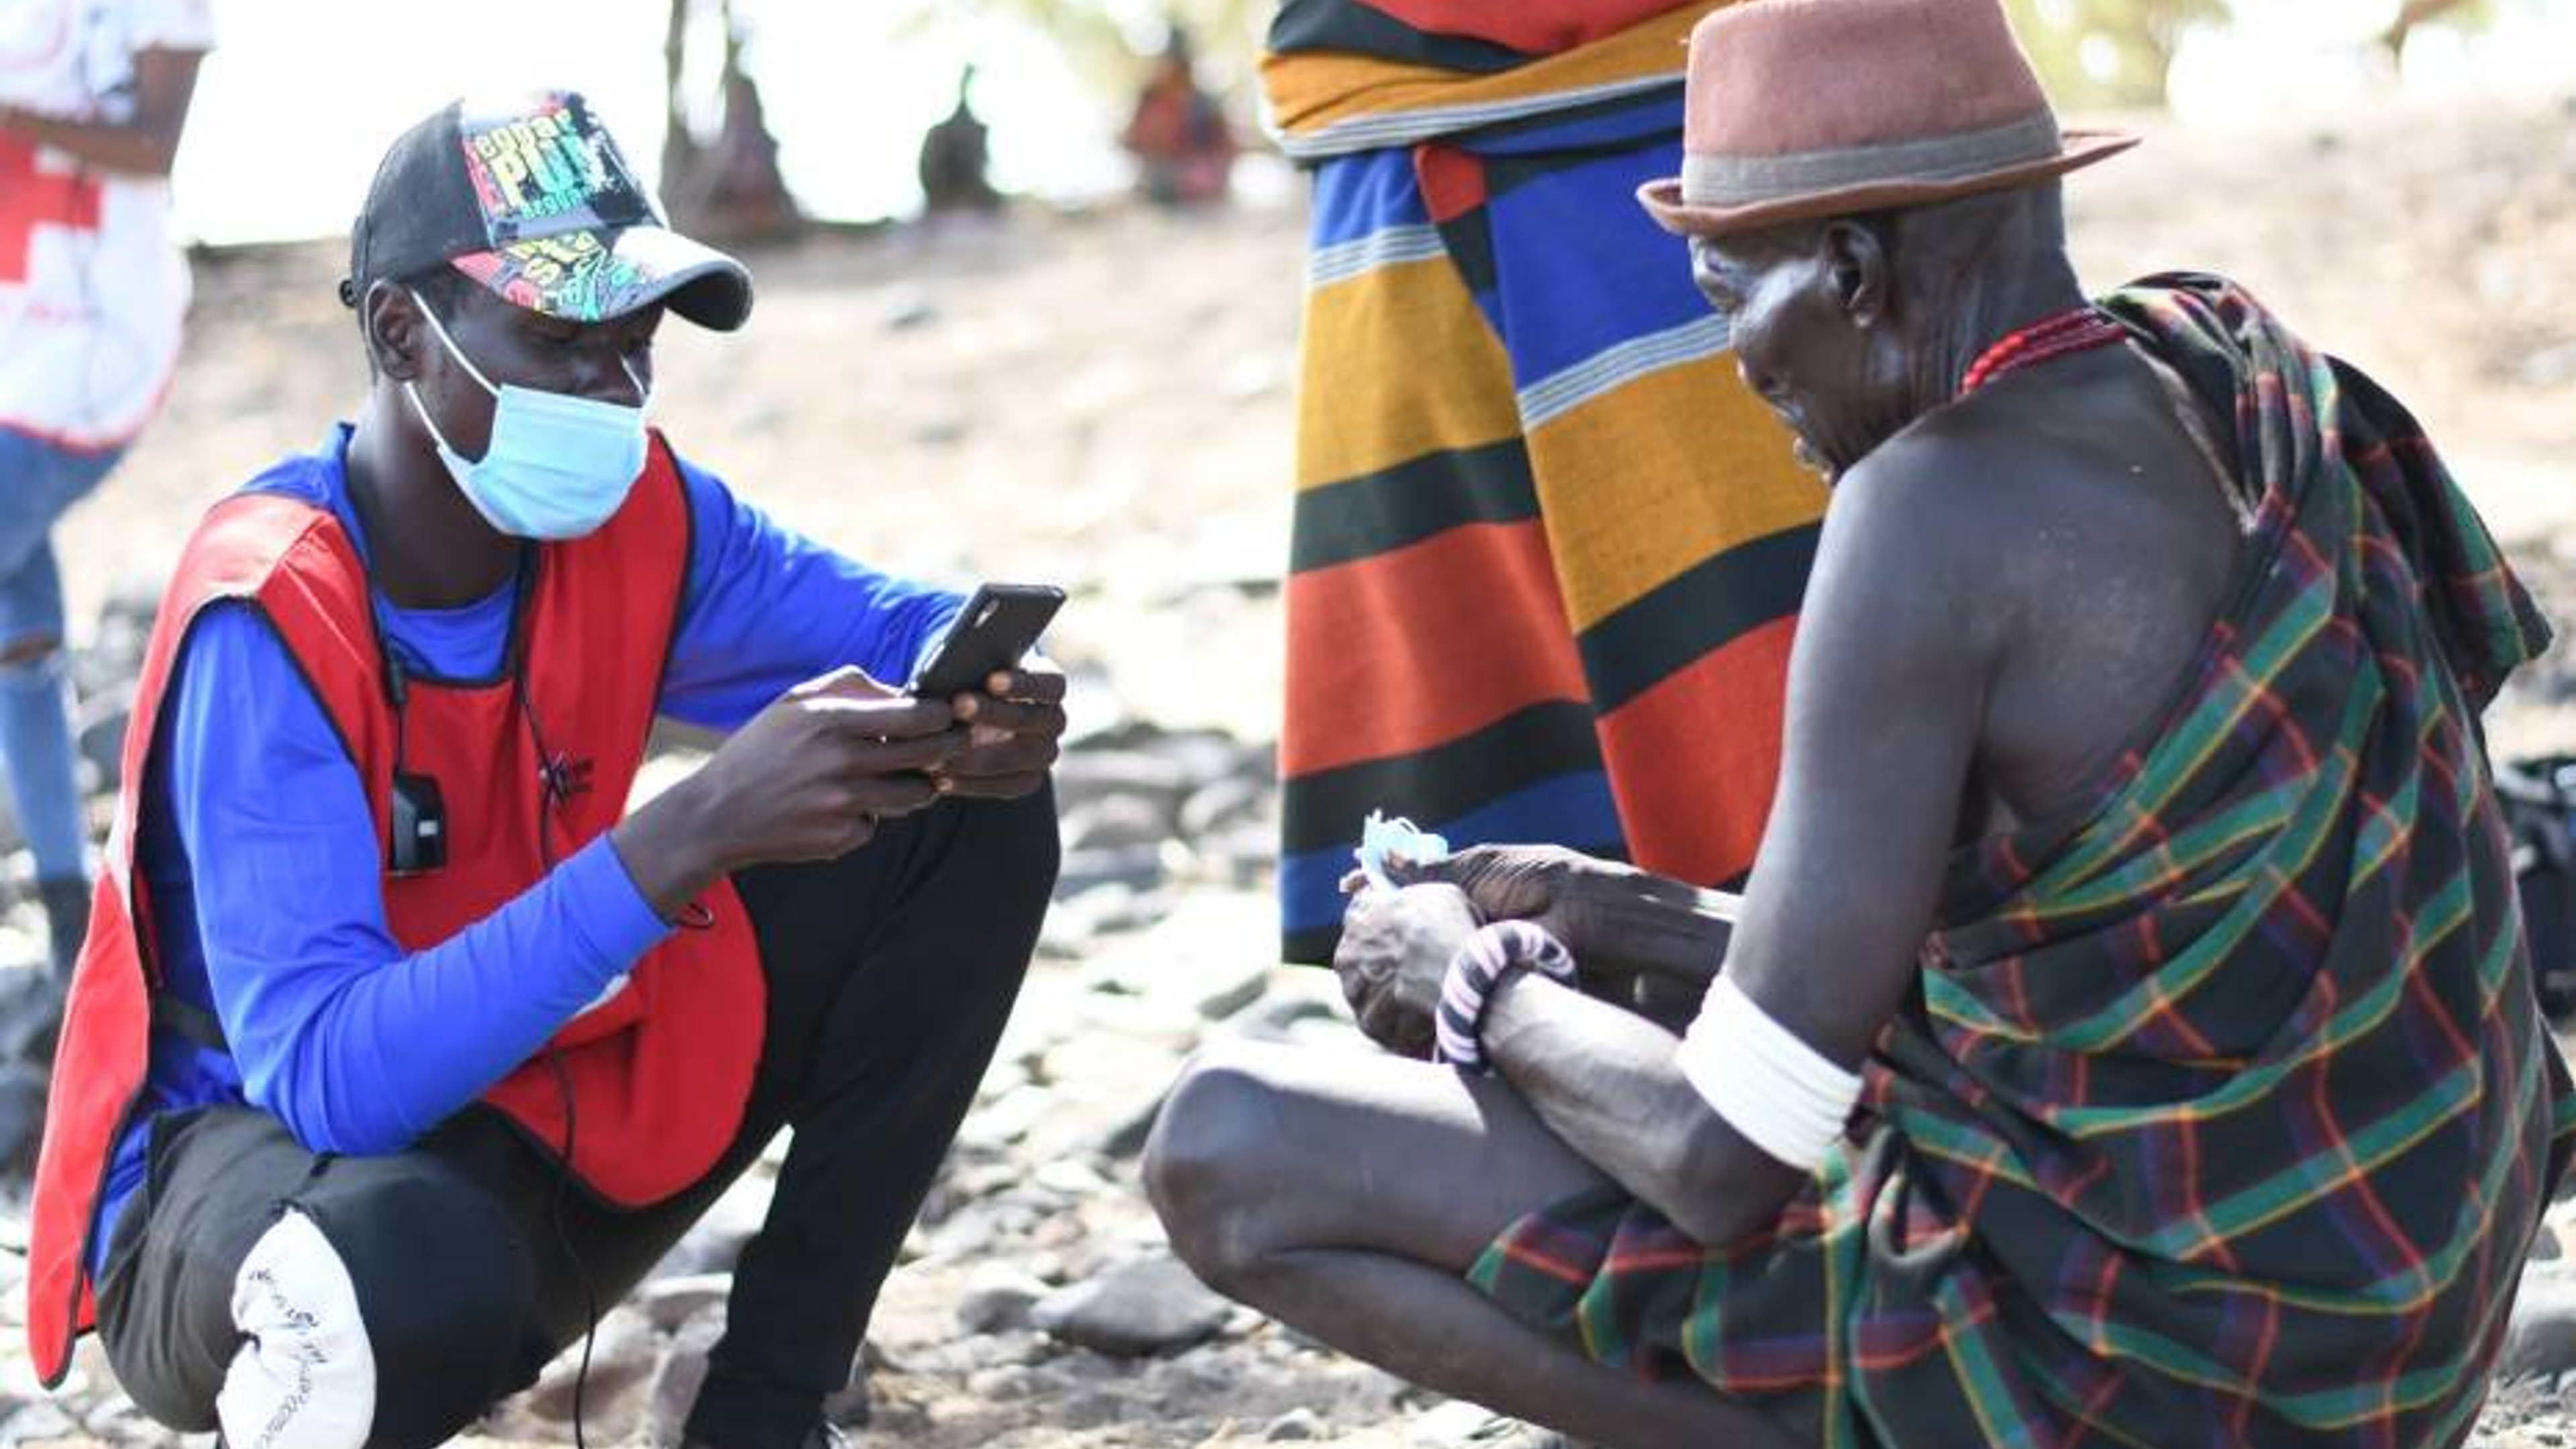 Man registering to receive cash assistance in Uganda